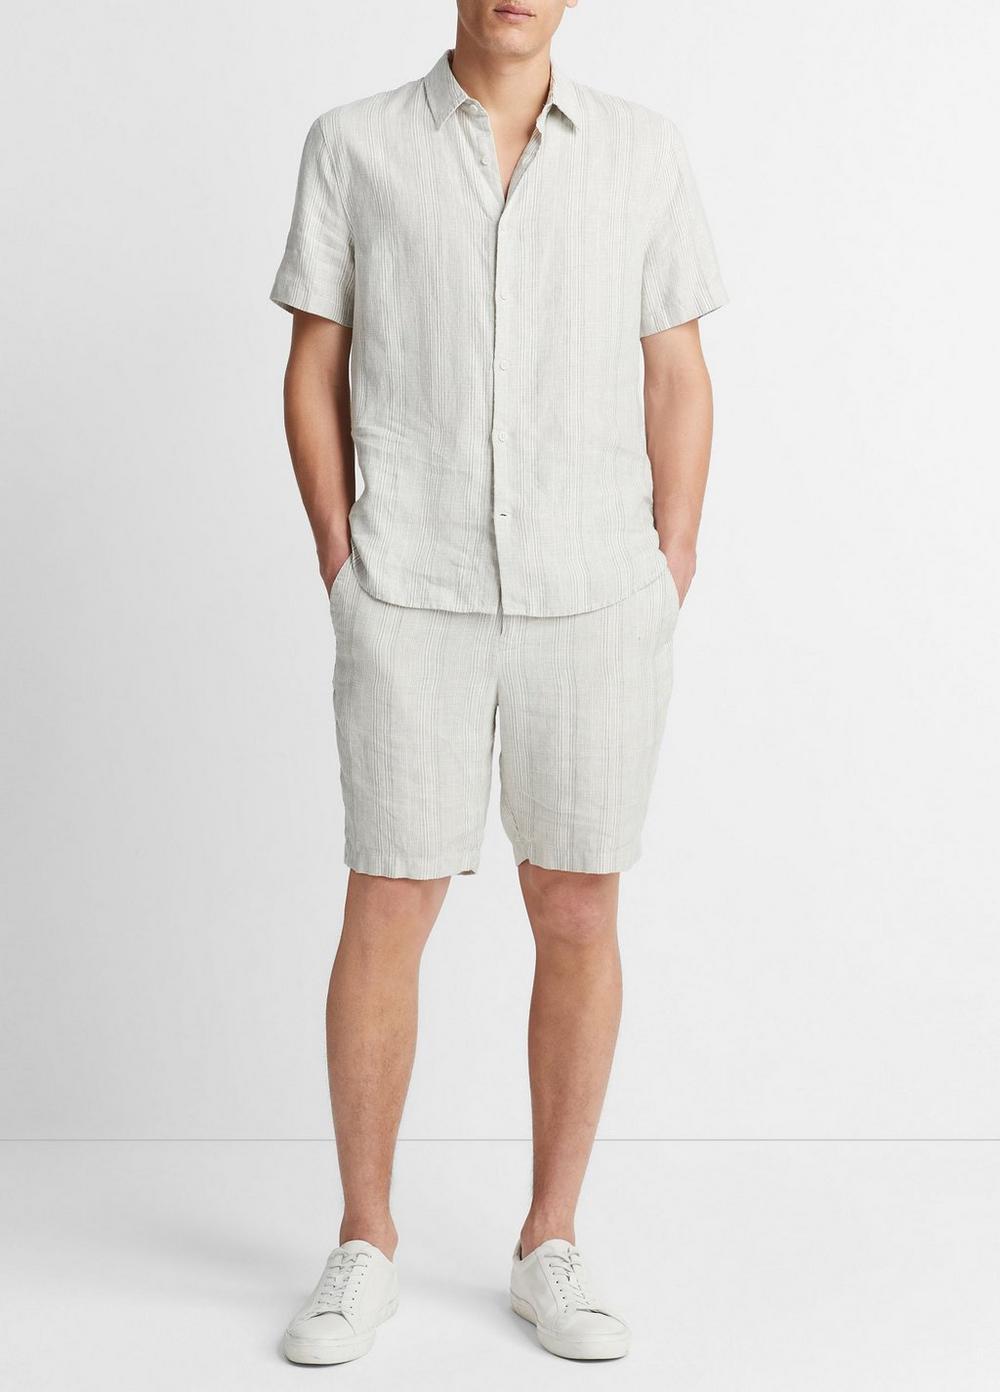 Shadow Stripe Hemp Short-Sleeve Shirt, Alabaster/limestone, Size XL Vince